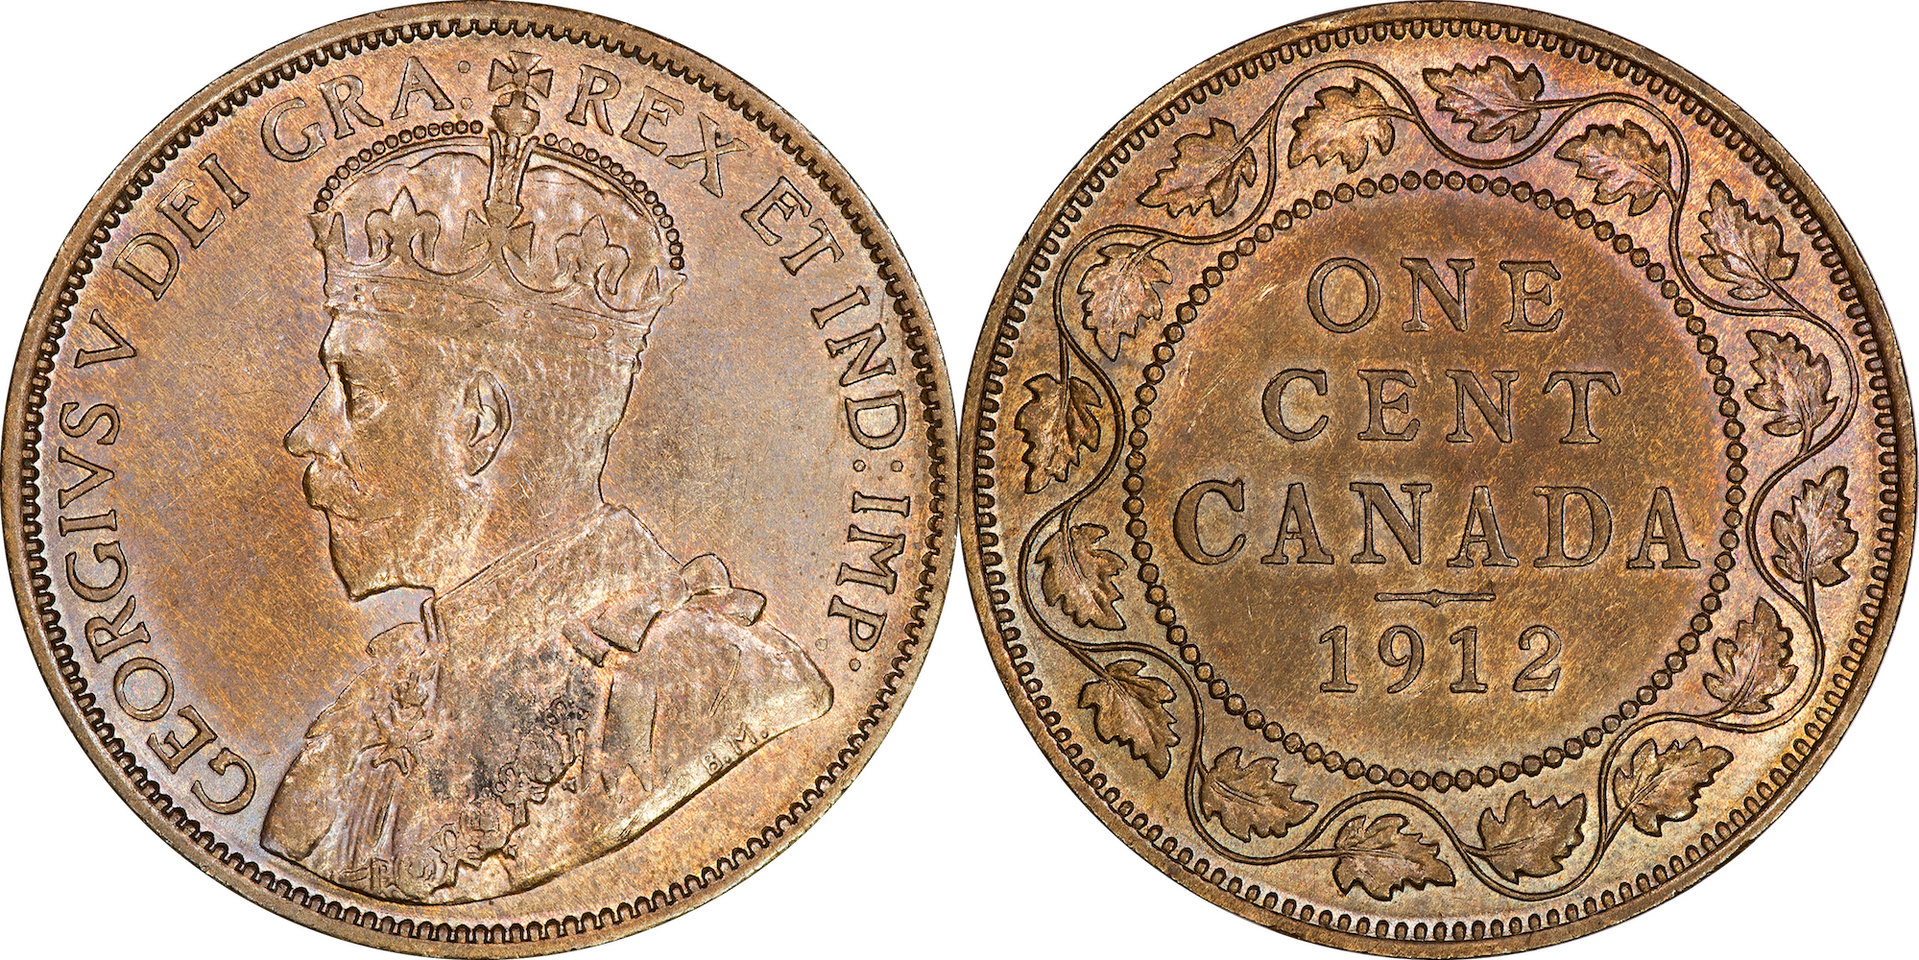 Canada - 1912 Large Cent.jpg